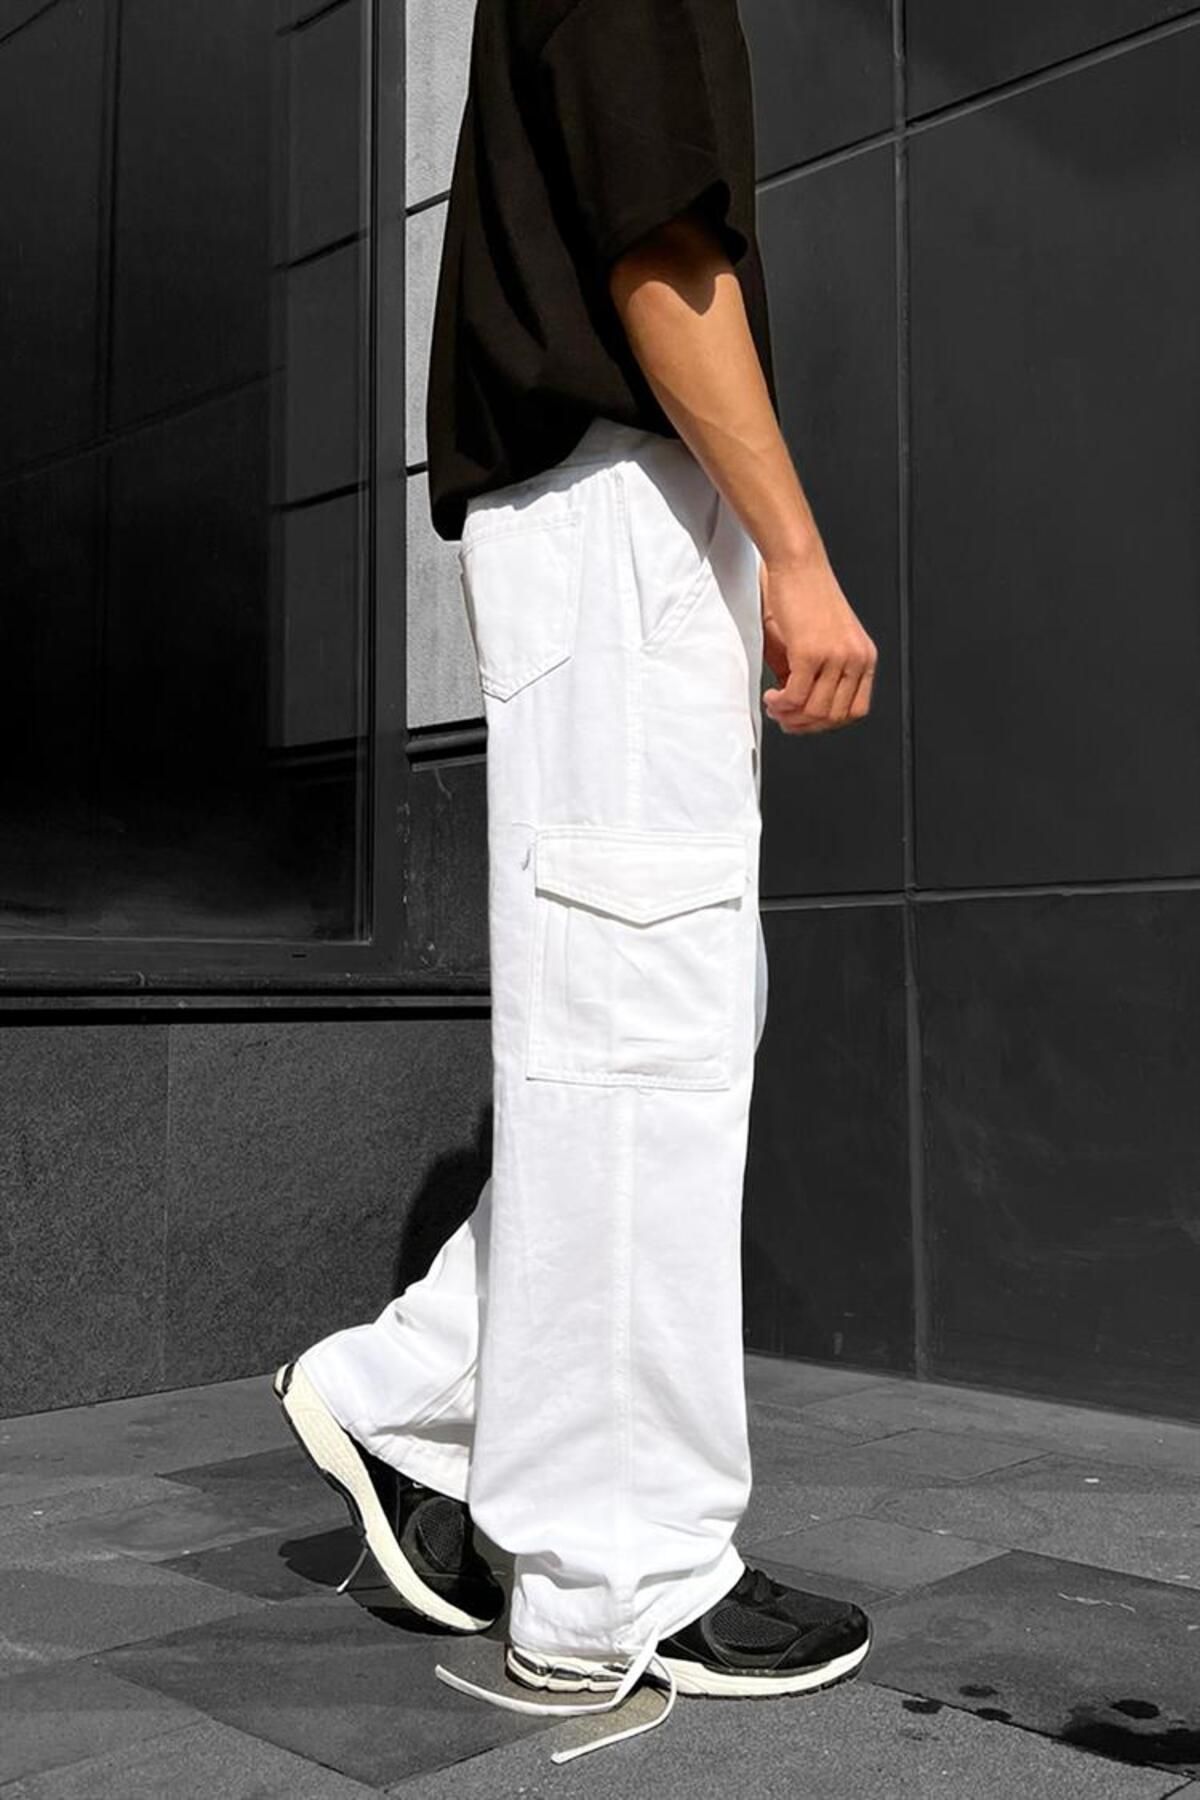 CYZFZJP Harajuku White Cargo Pants Women Punk Pants Chain Baggy Oversize  Korean Style Trousers White XS at Amazon Women's Clothing store